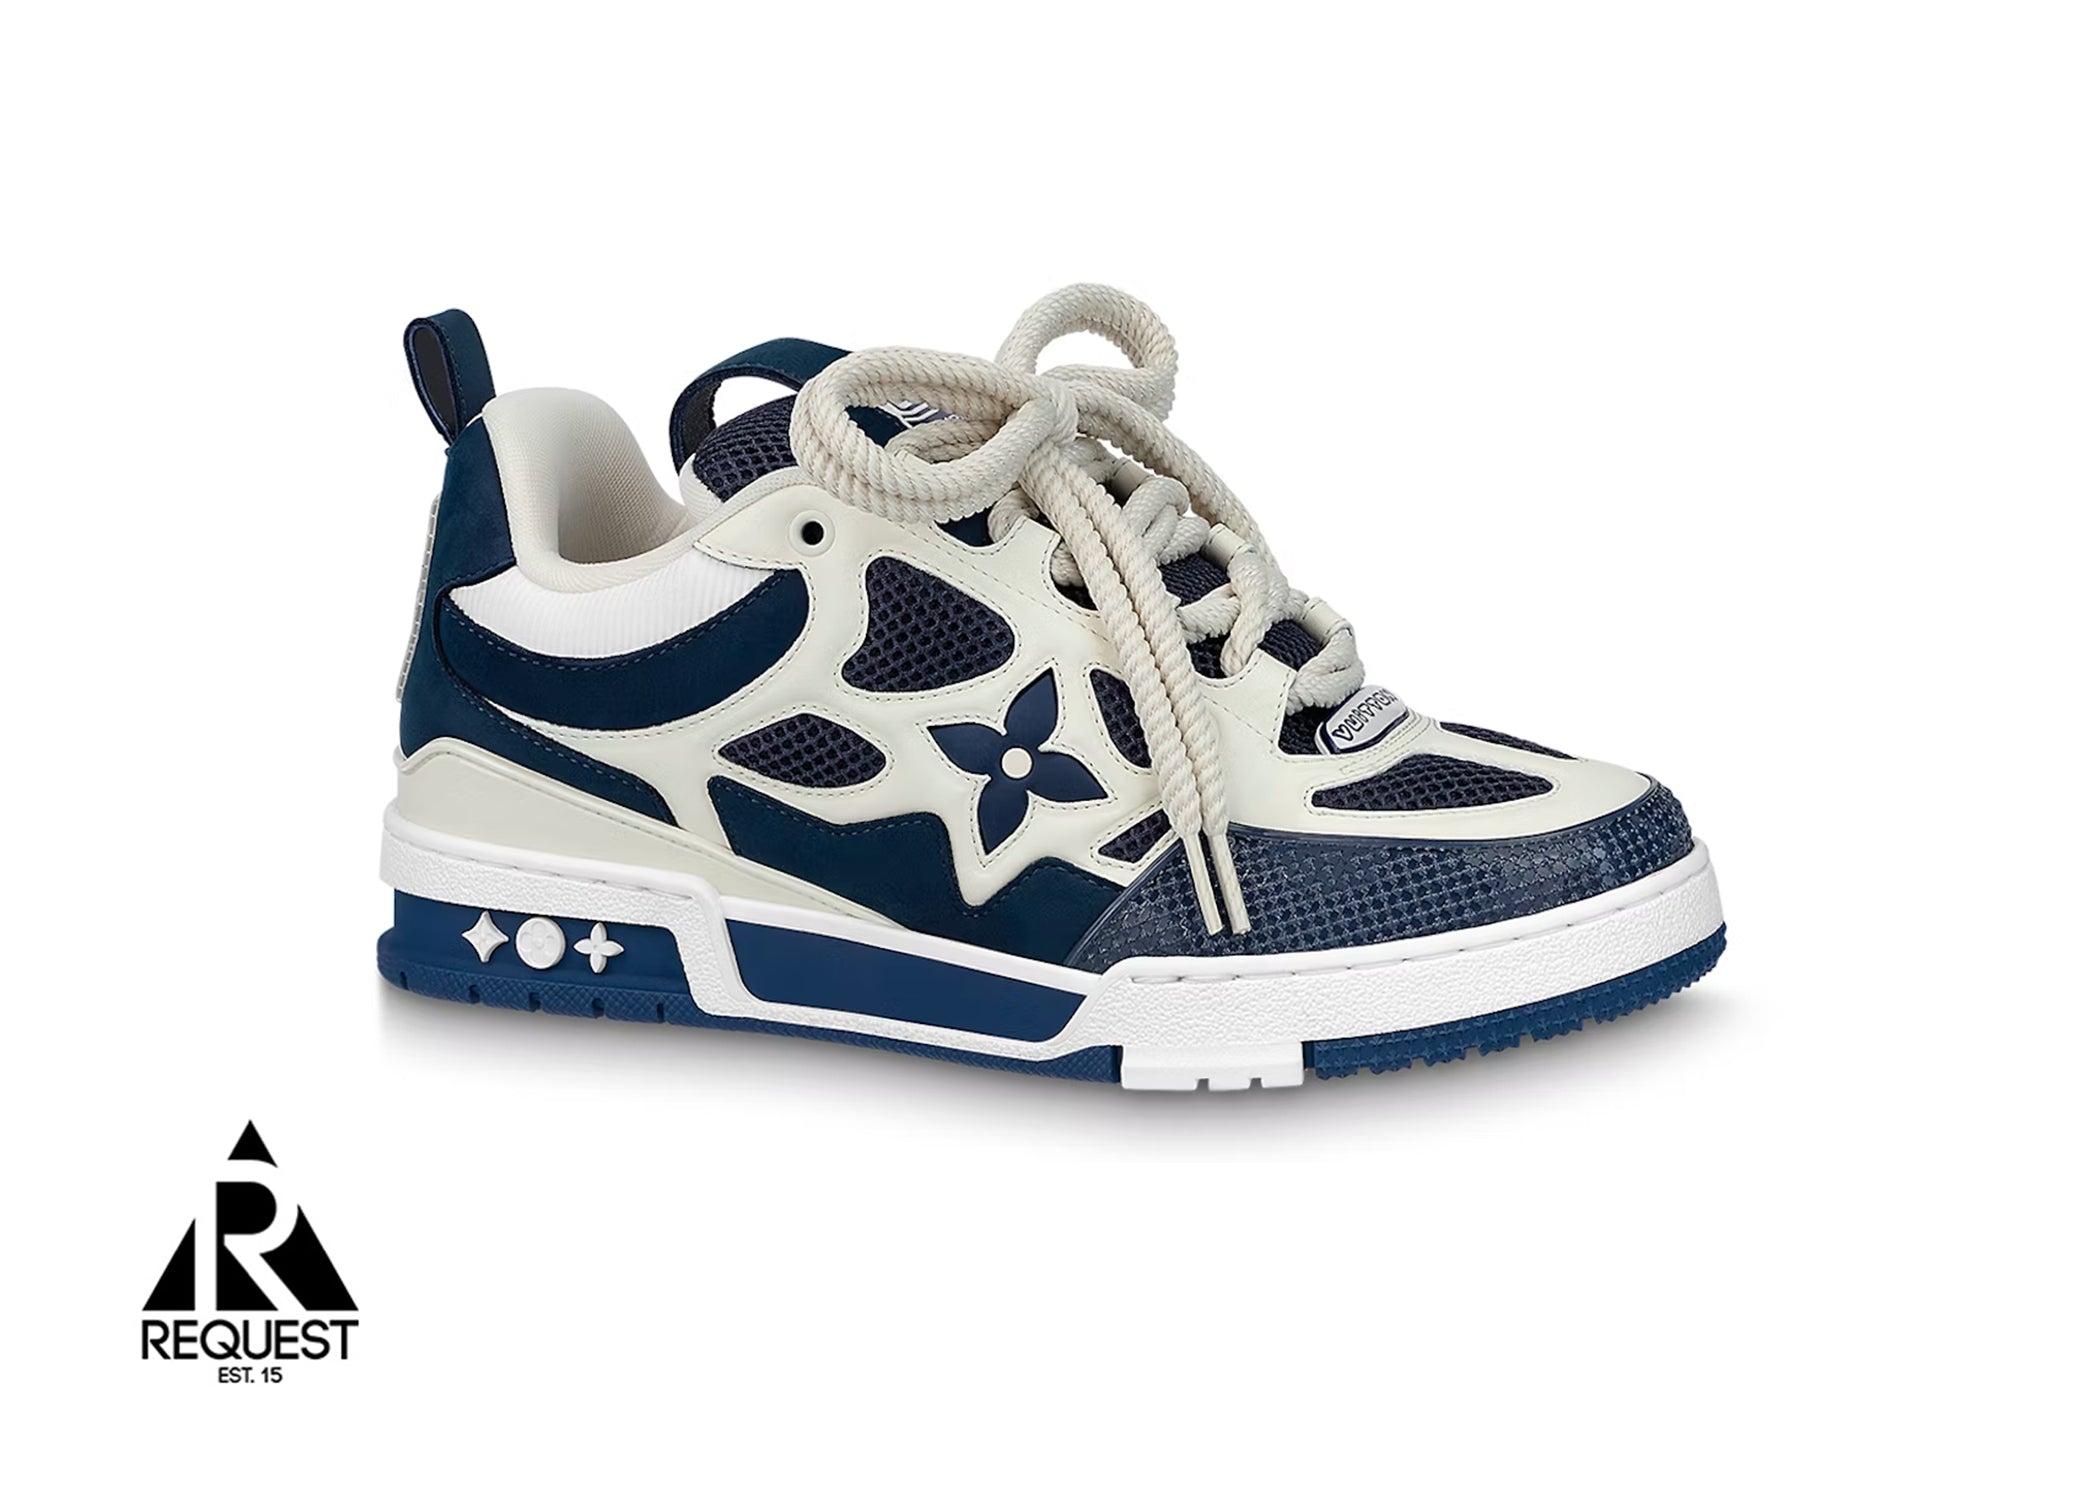 Louis Vuitton LV Maxi Trainer Blue Sneaker – Cheap Willardmarine Jordan  outlet